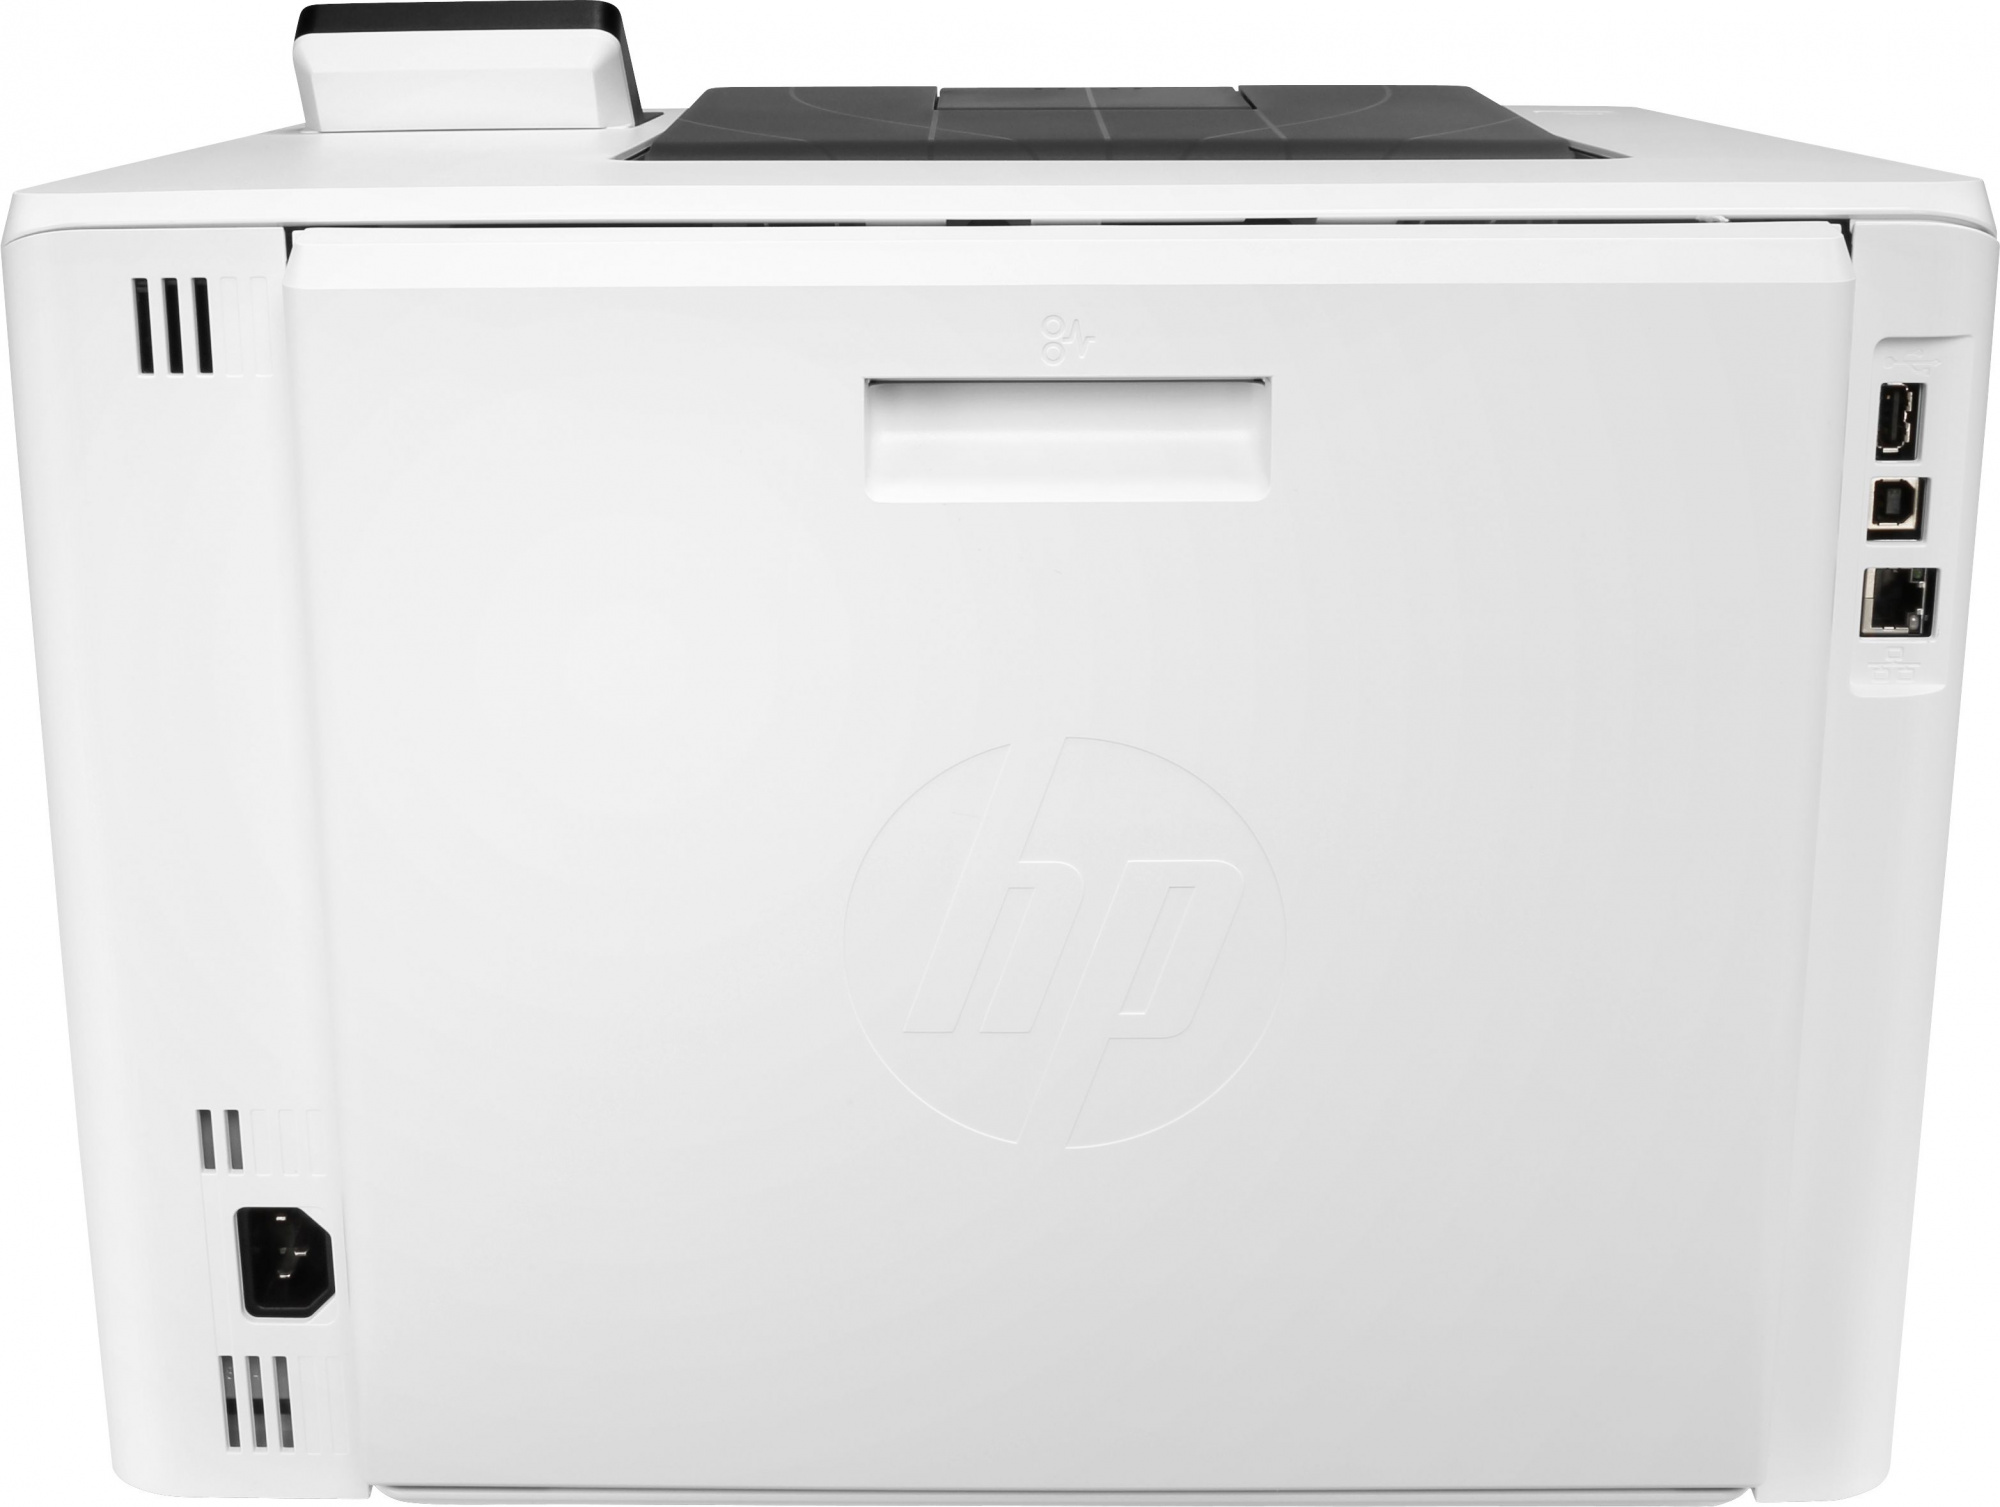 Принтер HP Color LaserJet Pro M455dn, белый (3PZ95A)